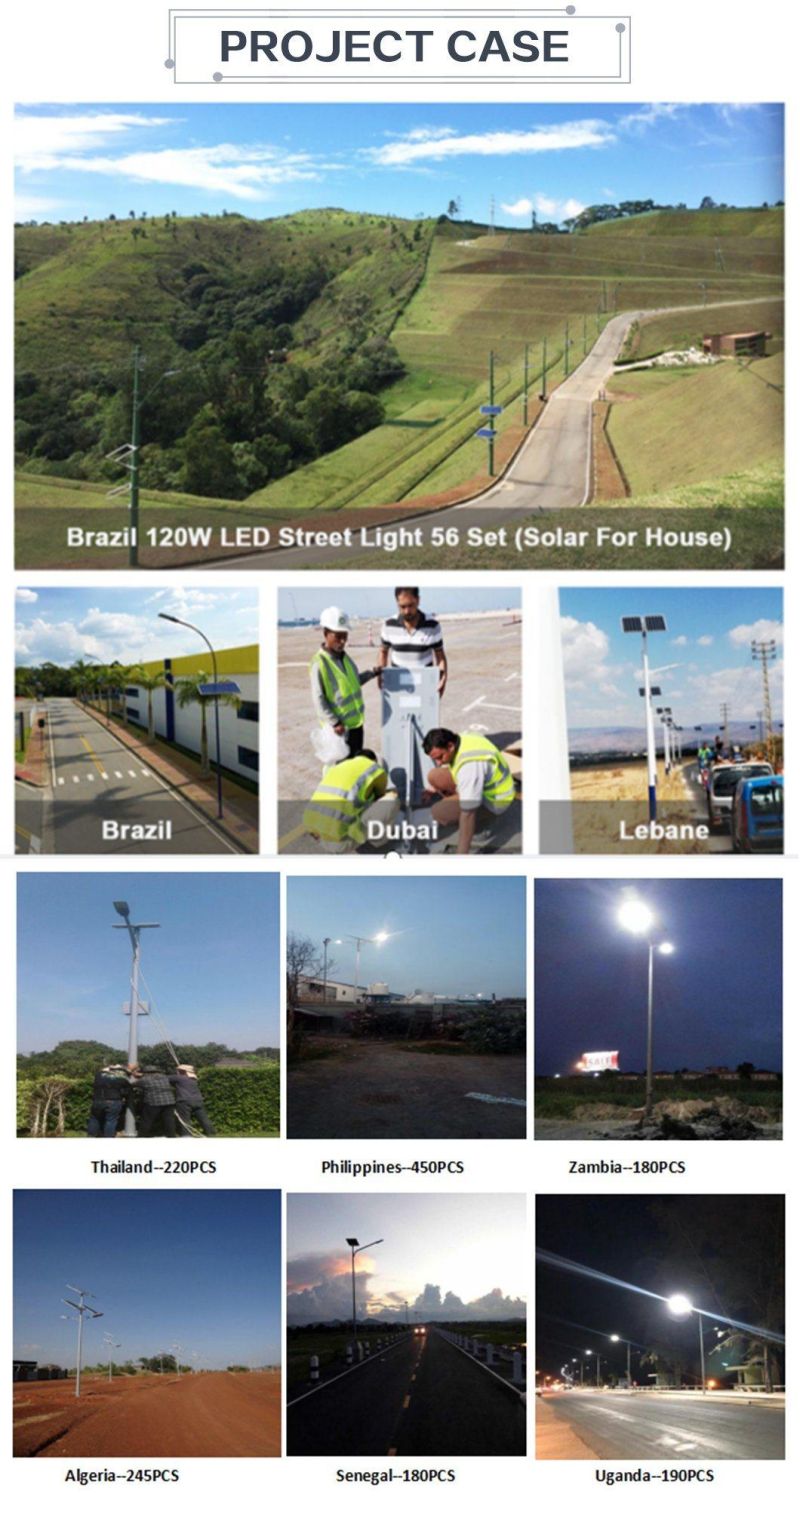 Split Solar Street Light 10m Conical Pole with Single Arm 100W LED Power